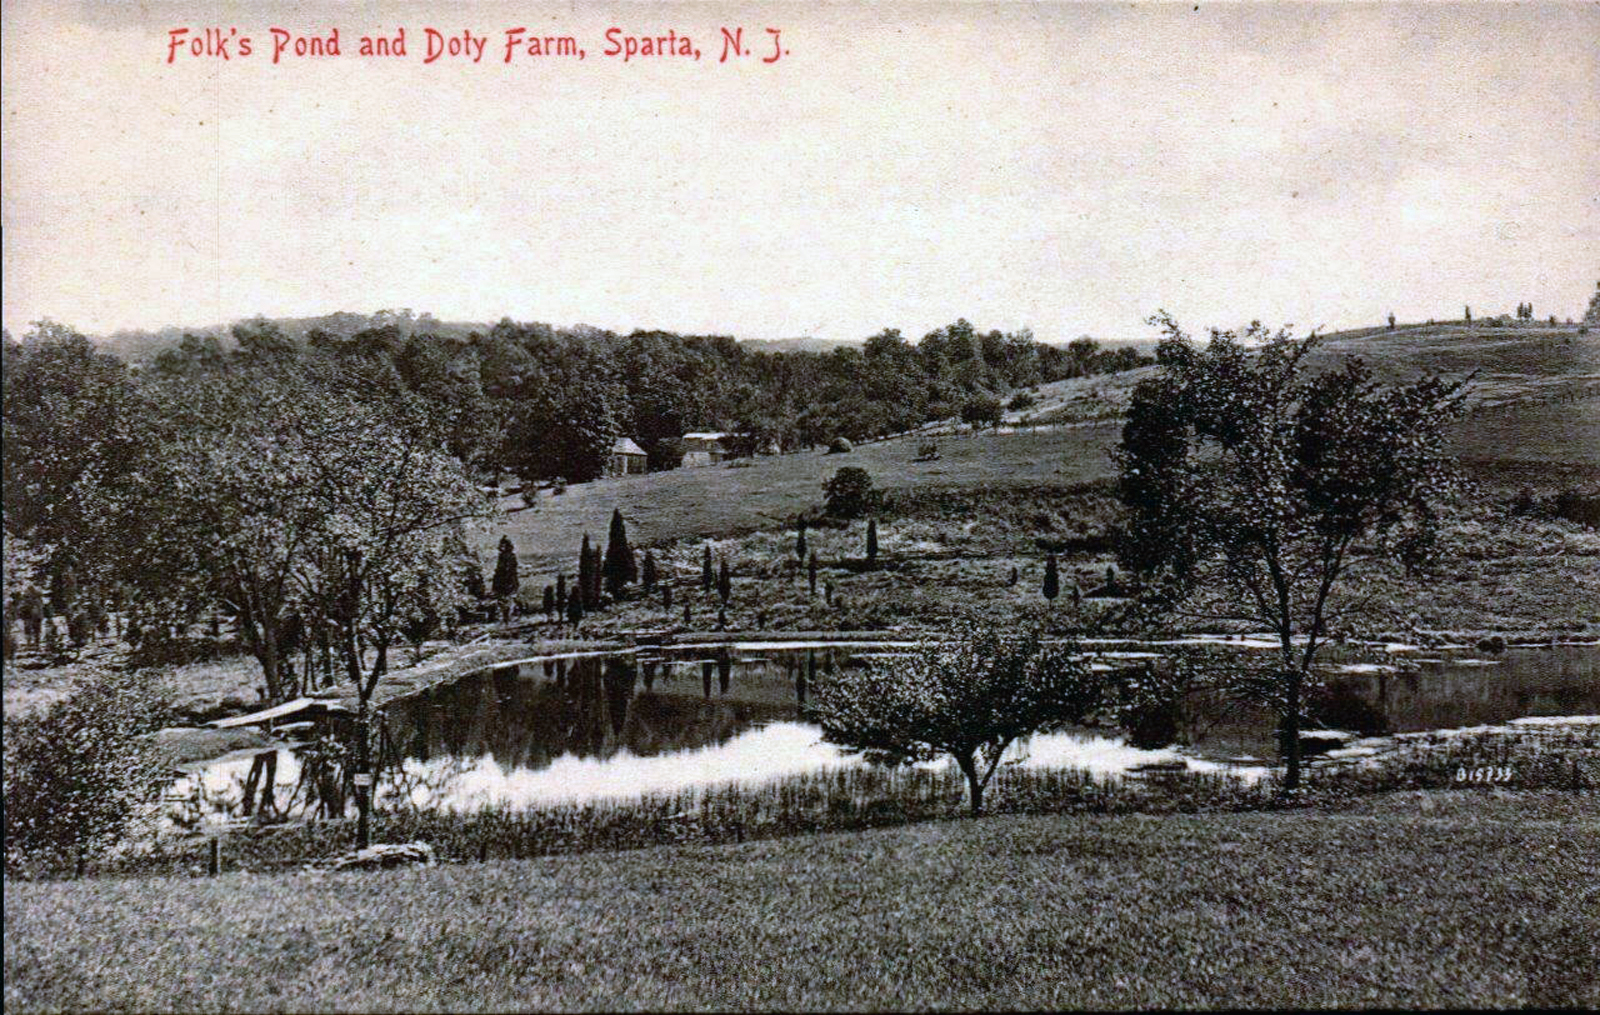 Sparta vicinity - Folks Pond and Doty Farm - c 1819